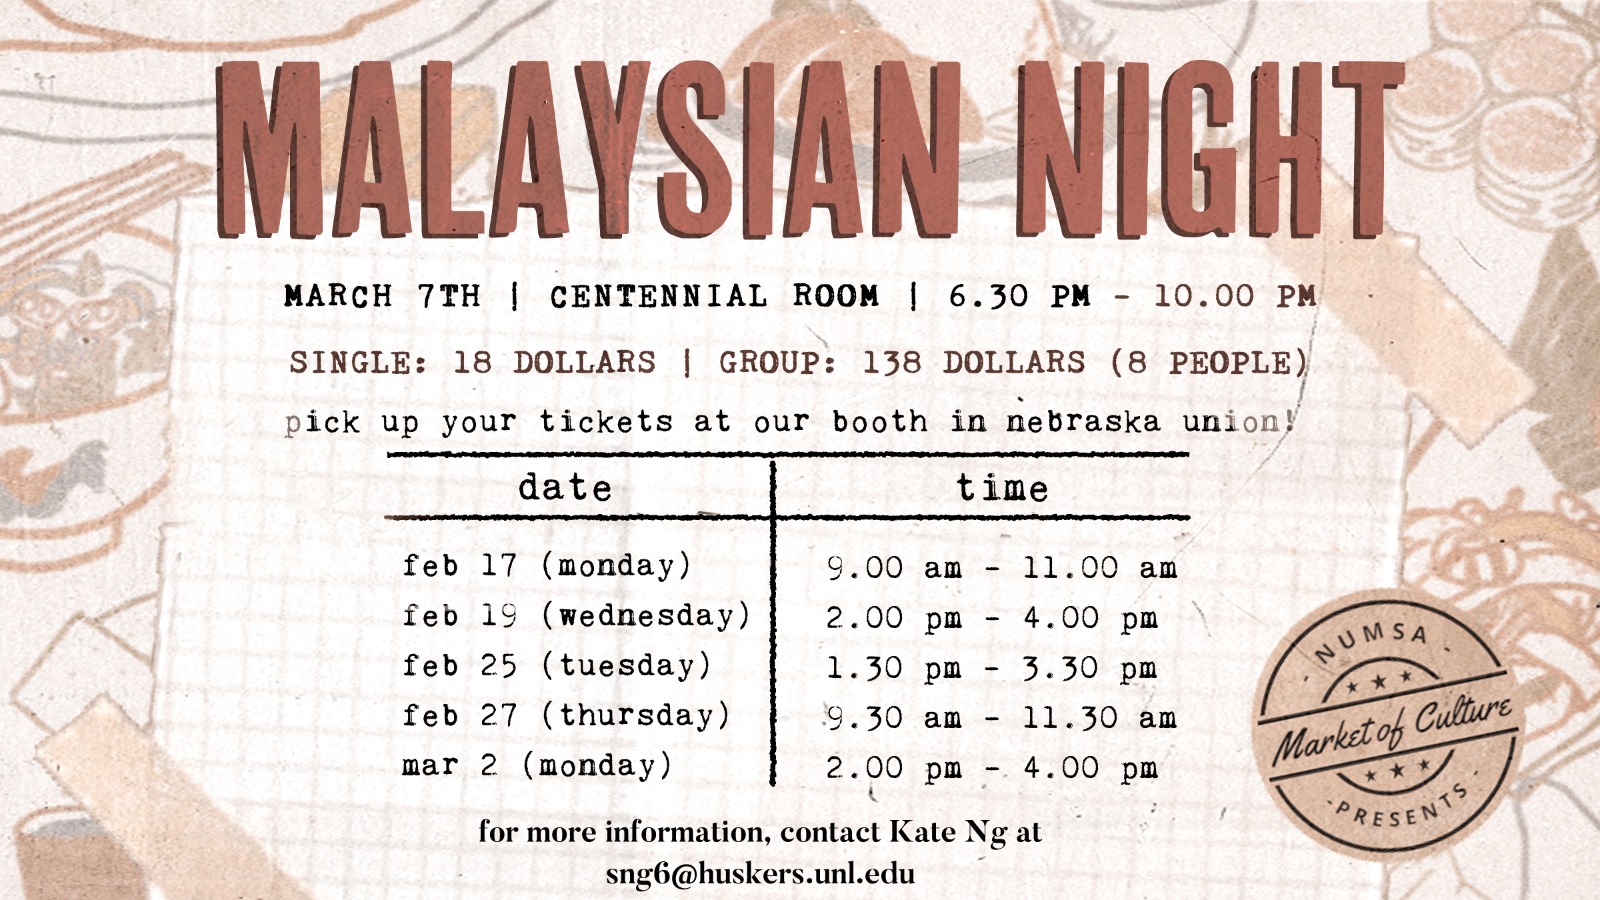 Malaysian Night Poster